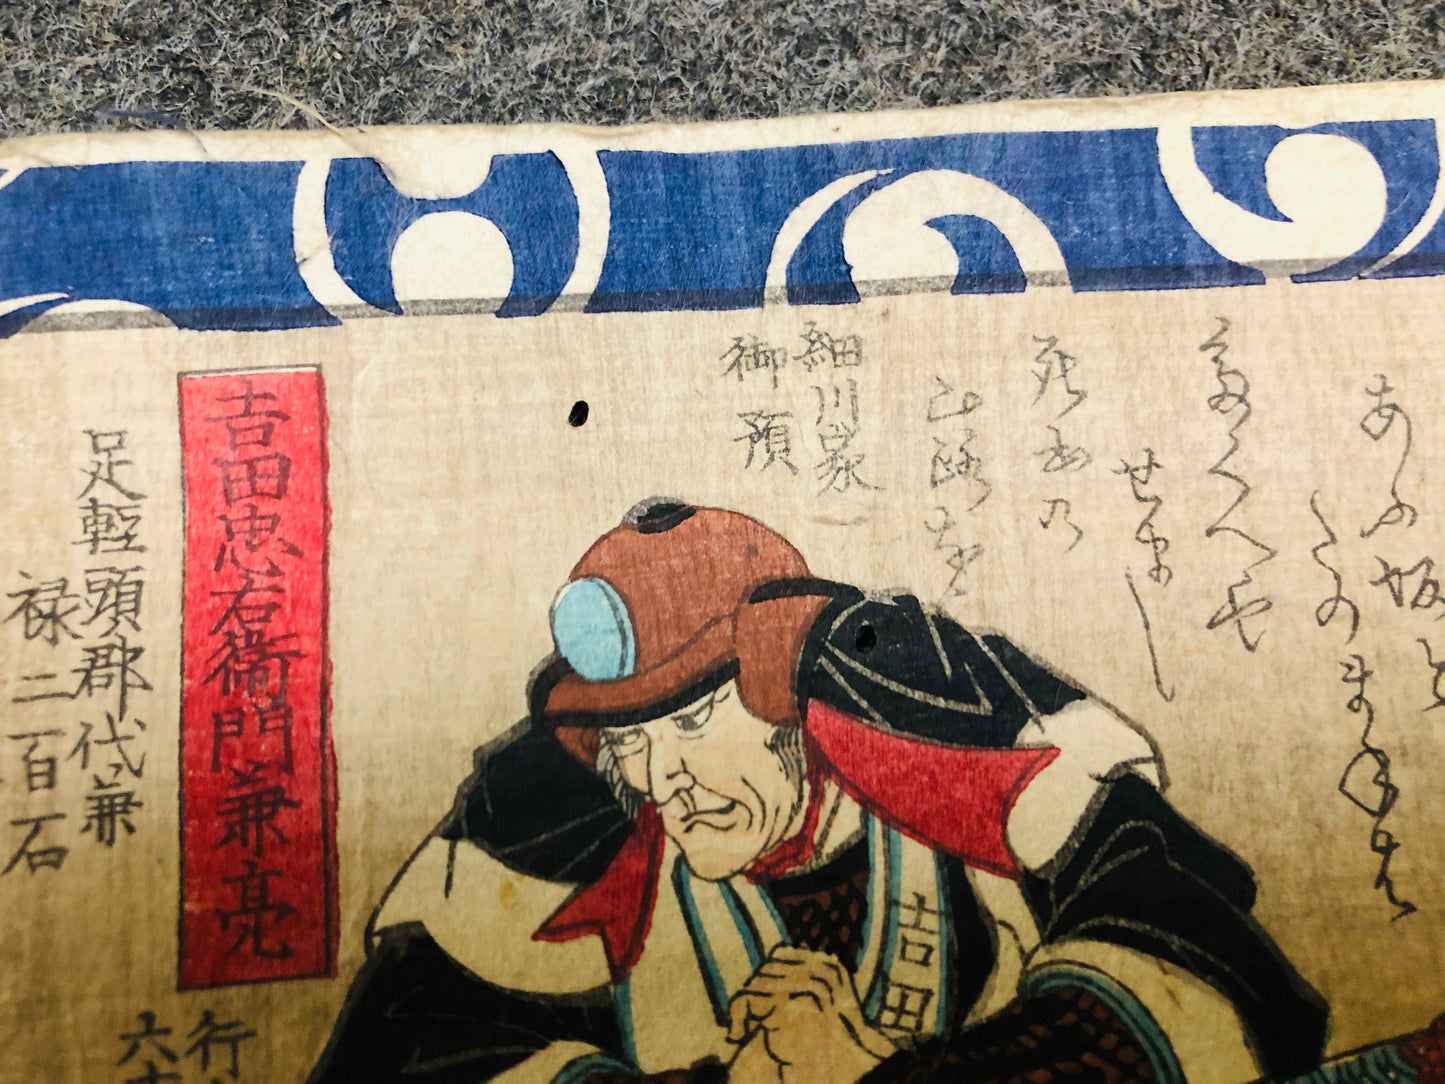 Y6425 [VIDEO] WOODBLOCK PRINT Yoshitoshi samurai warrior bushi Japan Ukiyoe antique art